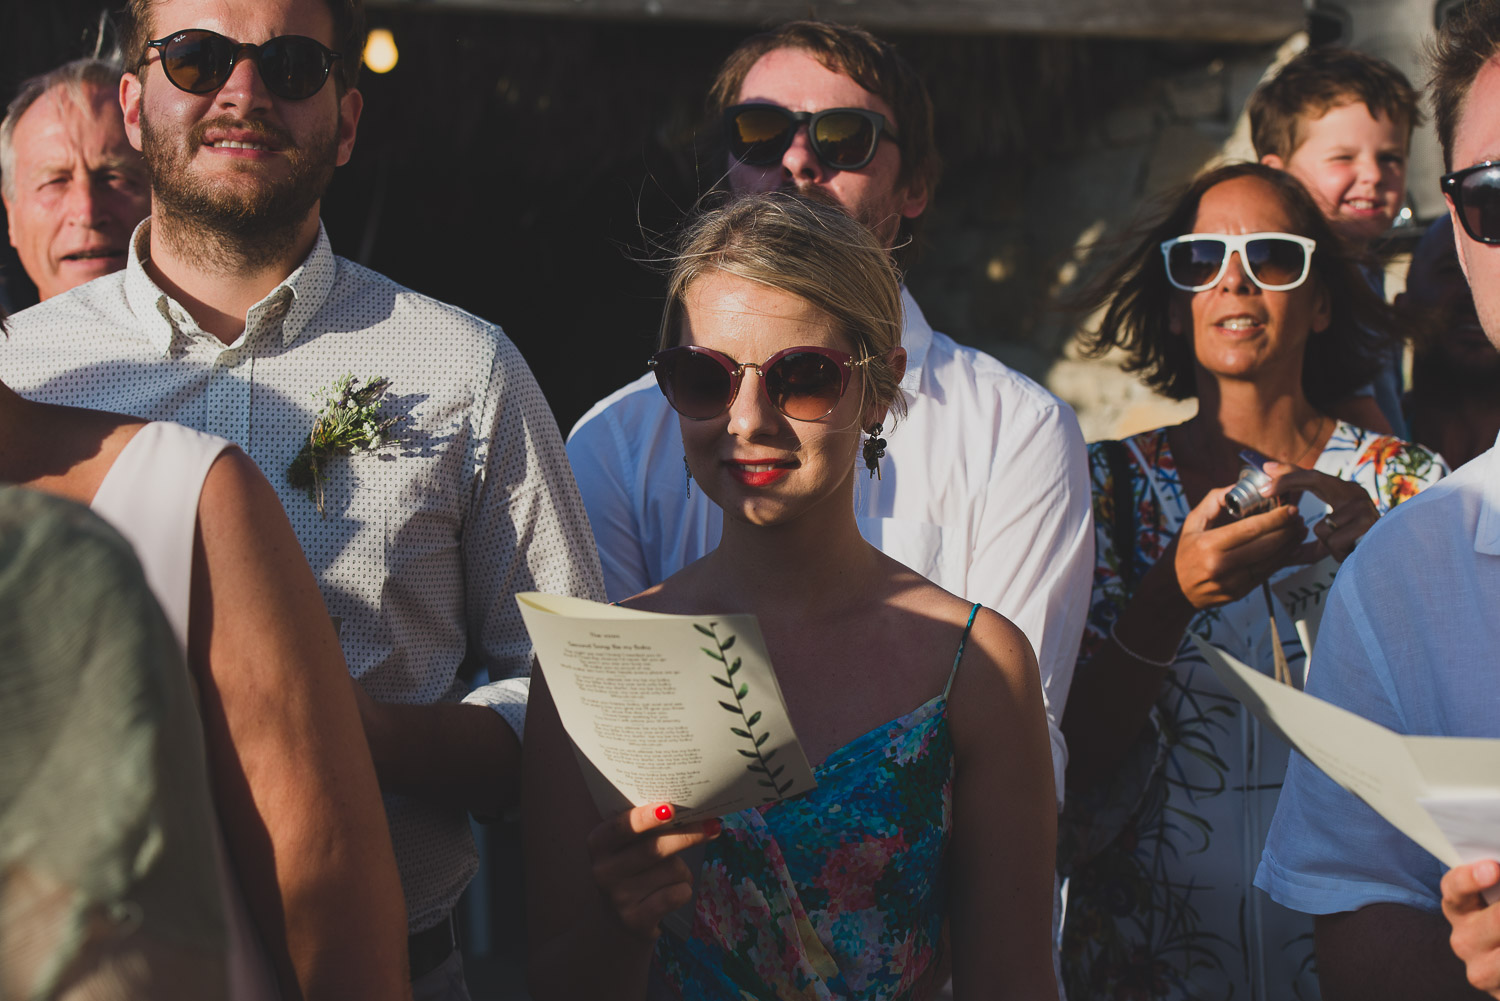 Wedding photographer Mykonos: guests singing at Mykonos wedding.